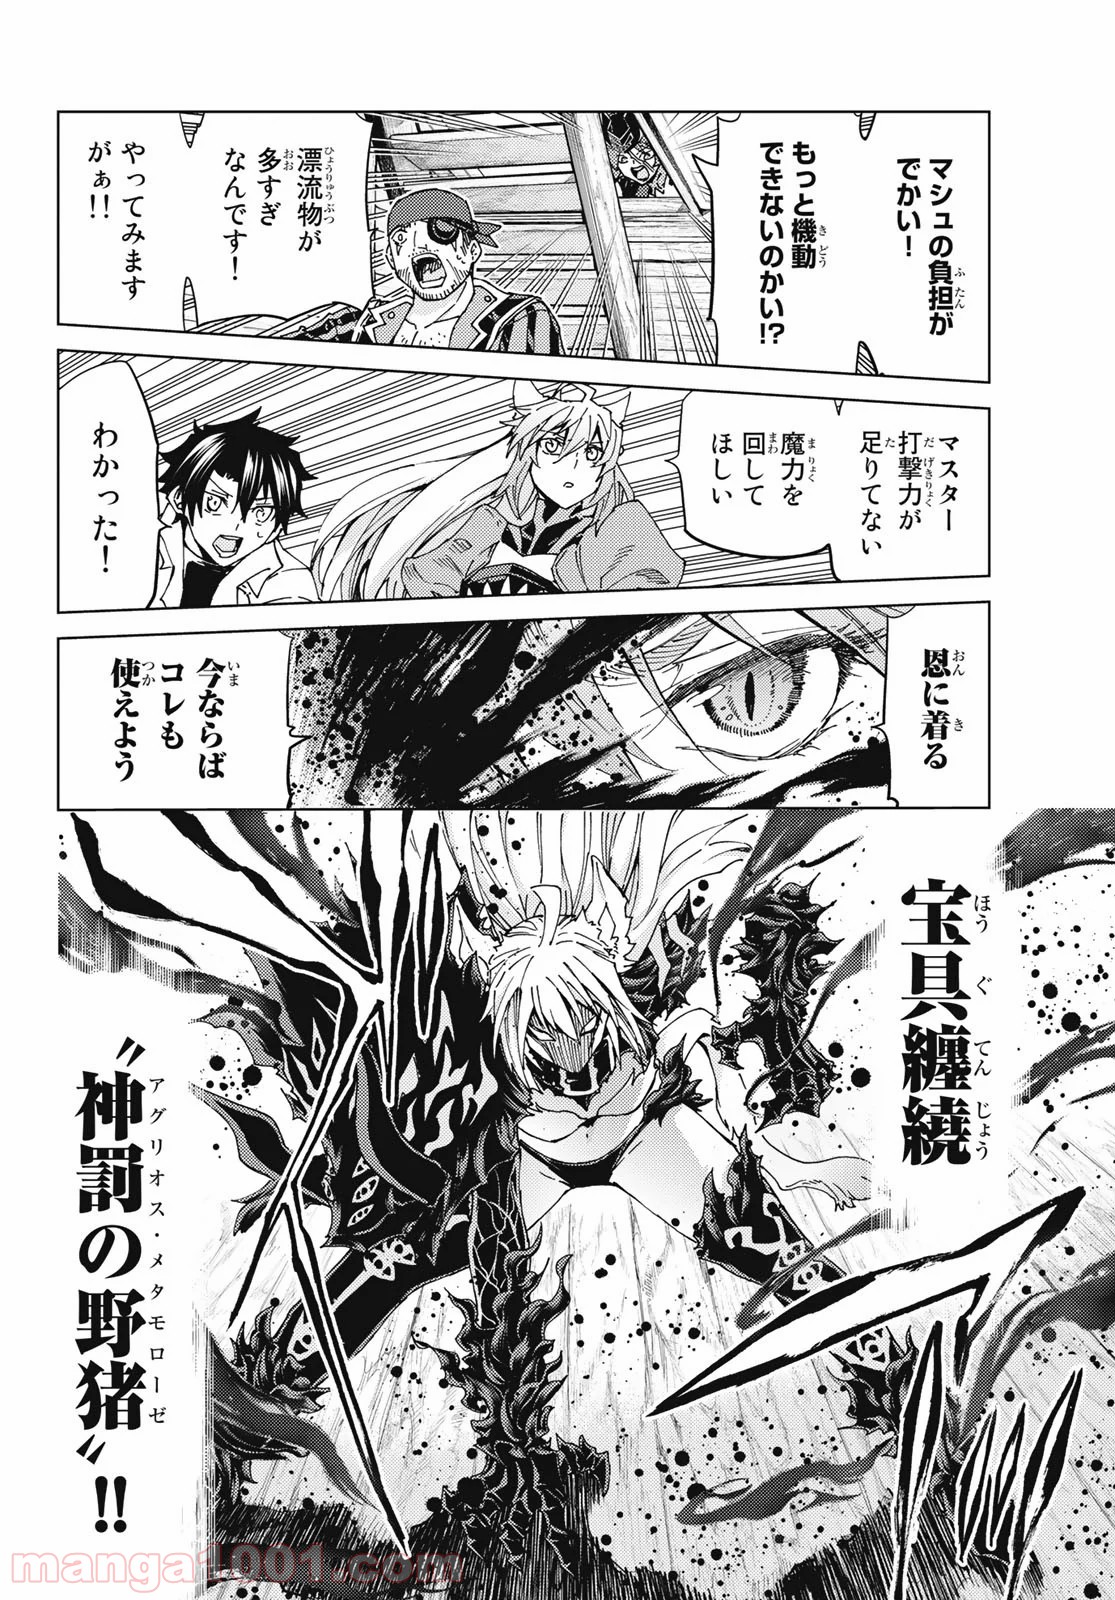 Fate Grand Order Turas Realta Manga Raw Fate Grand Order Turas Realta Manga Raw